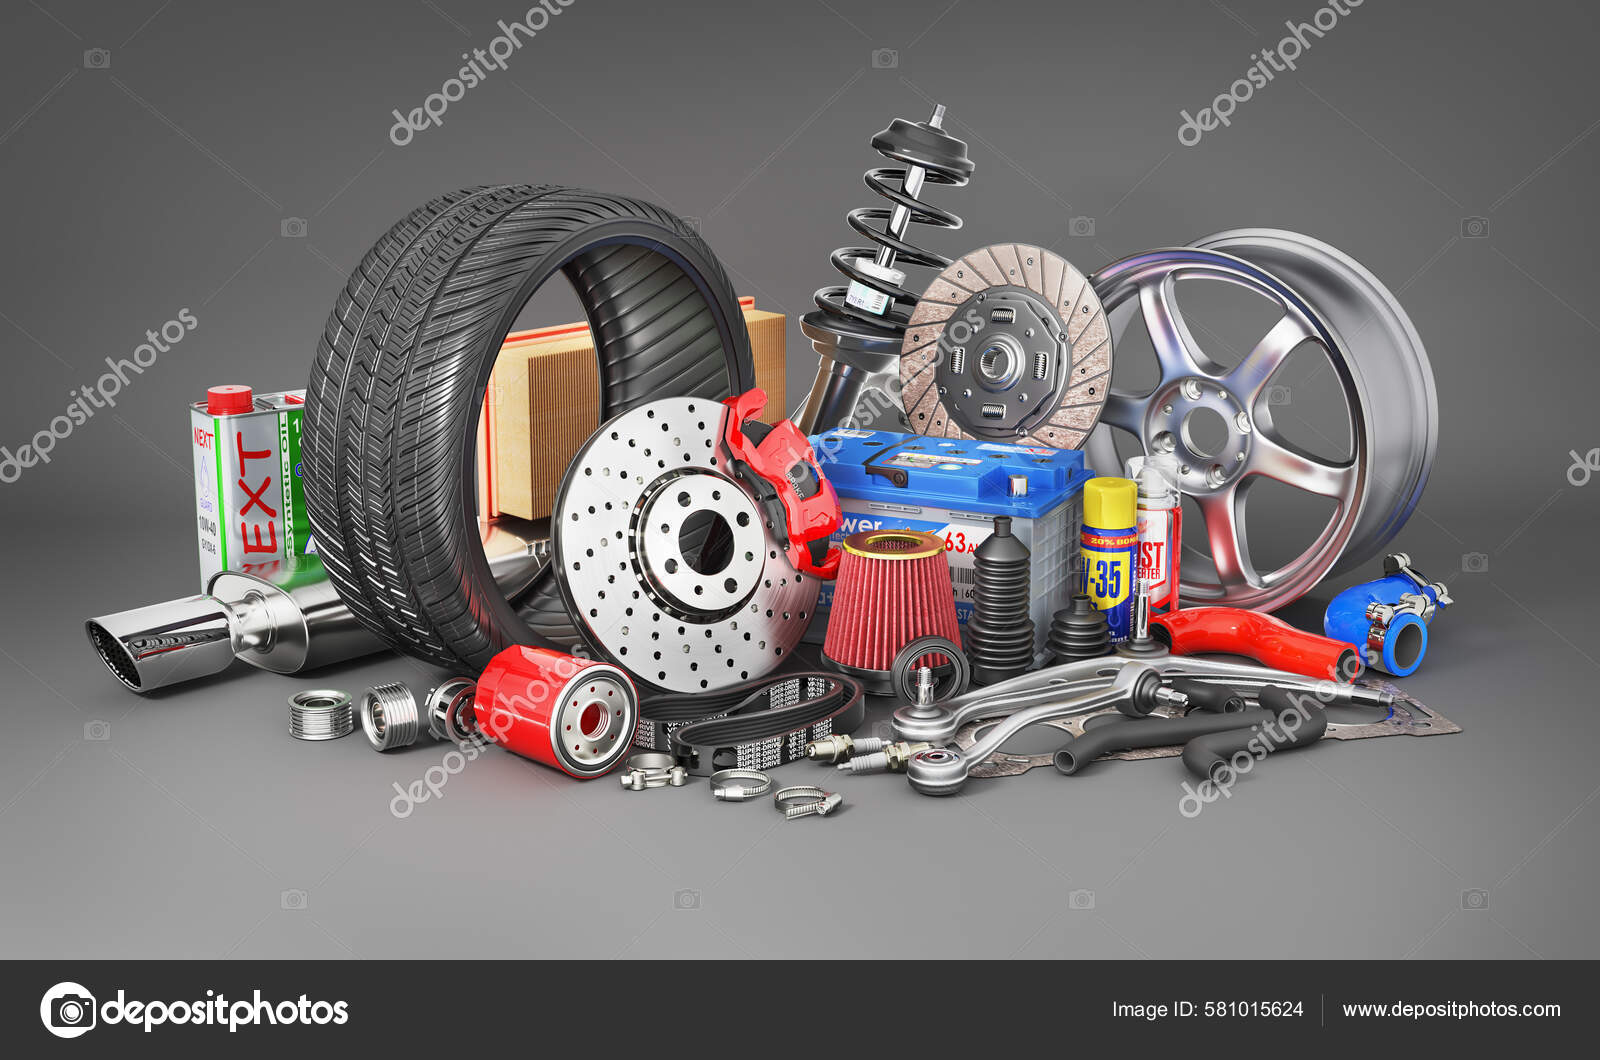 7,410 Auto Accessories Logo Images, Stock Photos, 3D objects, & Vectors